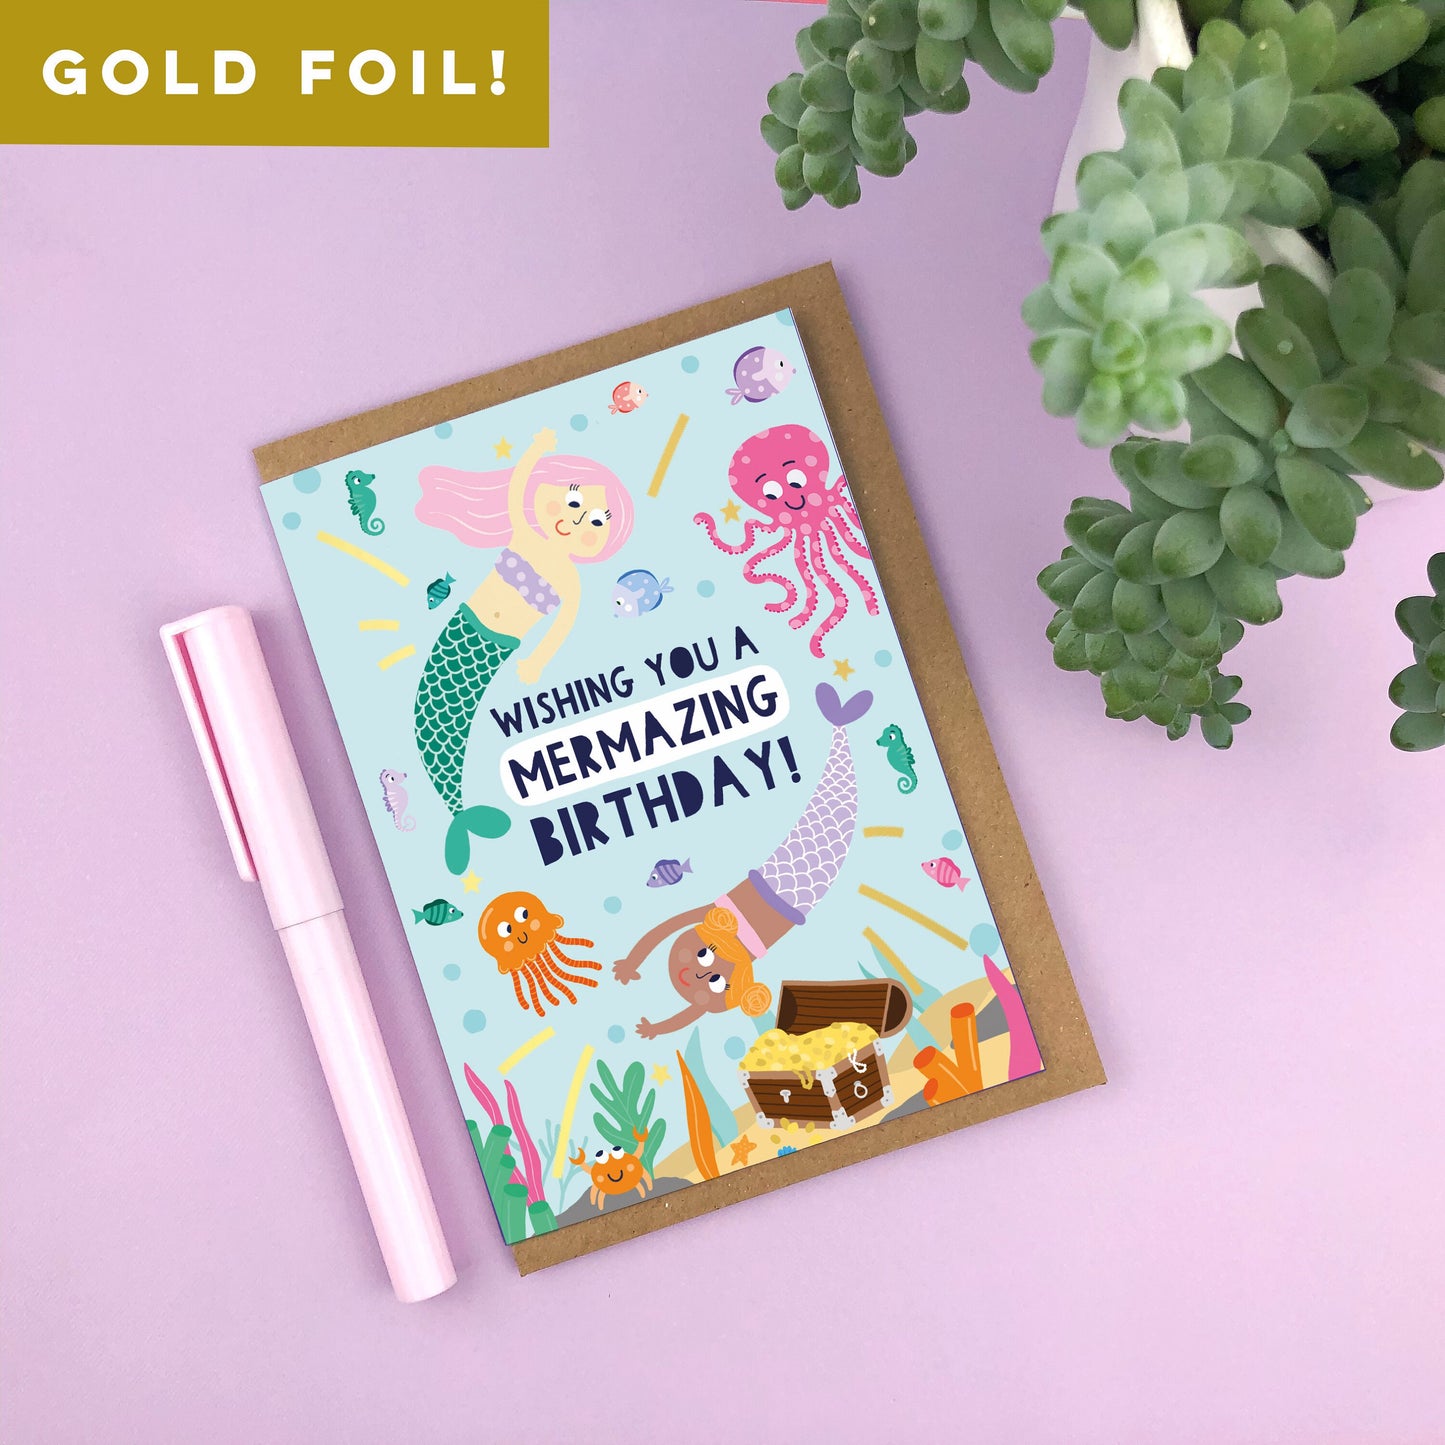 Wishing you a Mermazing Birthday' Gold Foiled Children's Birthday Card